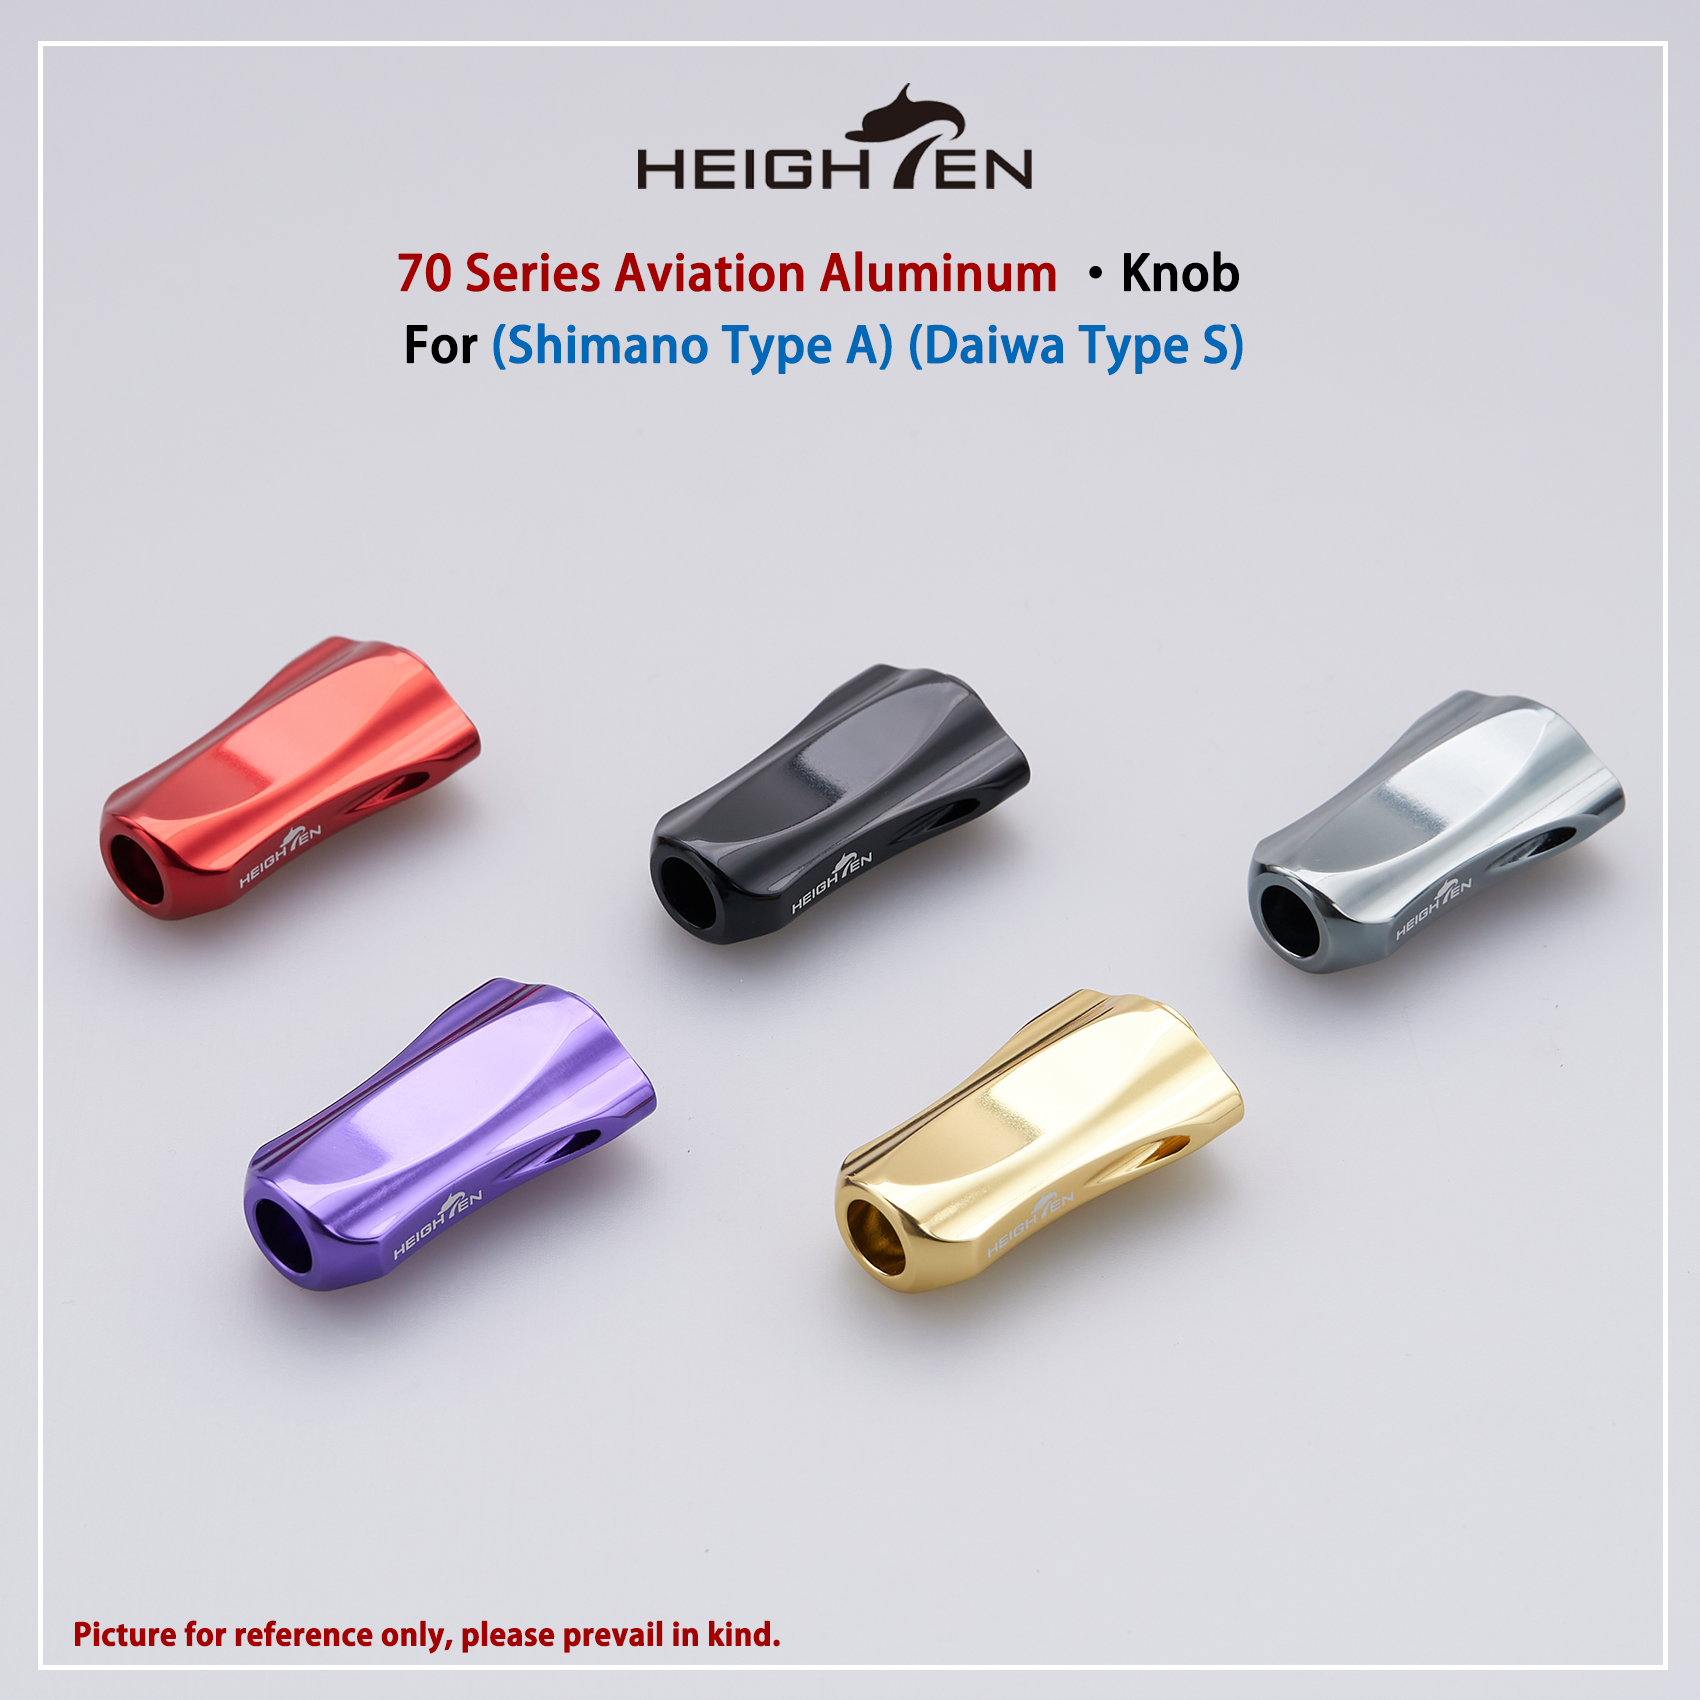 HEIGHTEN Reel Handle Knob (1 pc) for Shimano (Type A) Daiwa (Type S)  Aviation Aluminum Knob